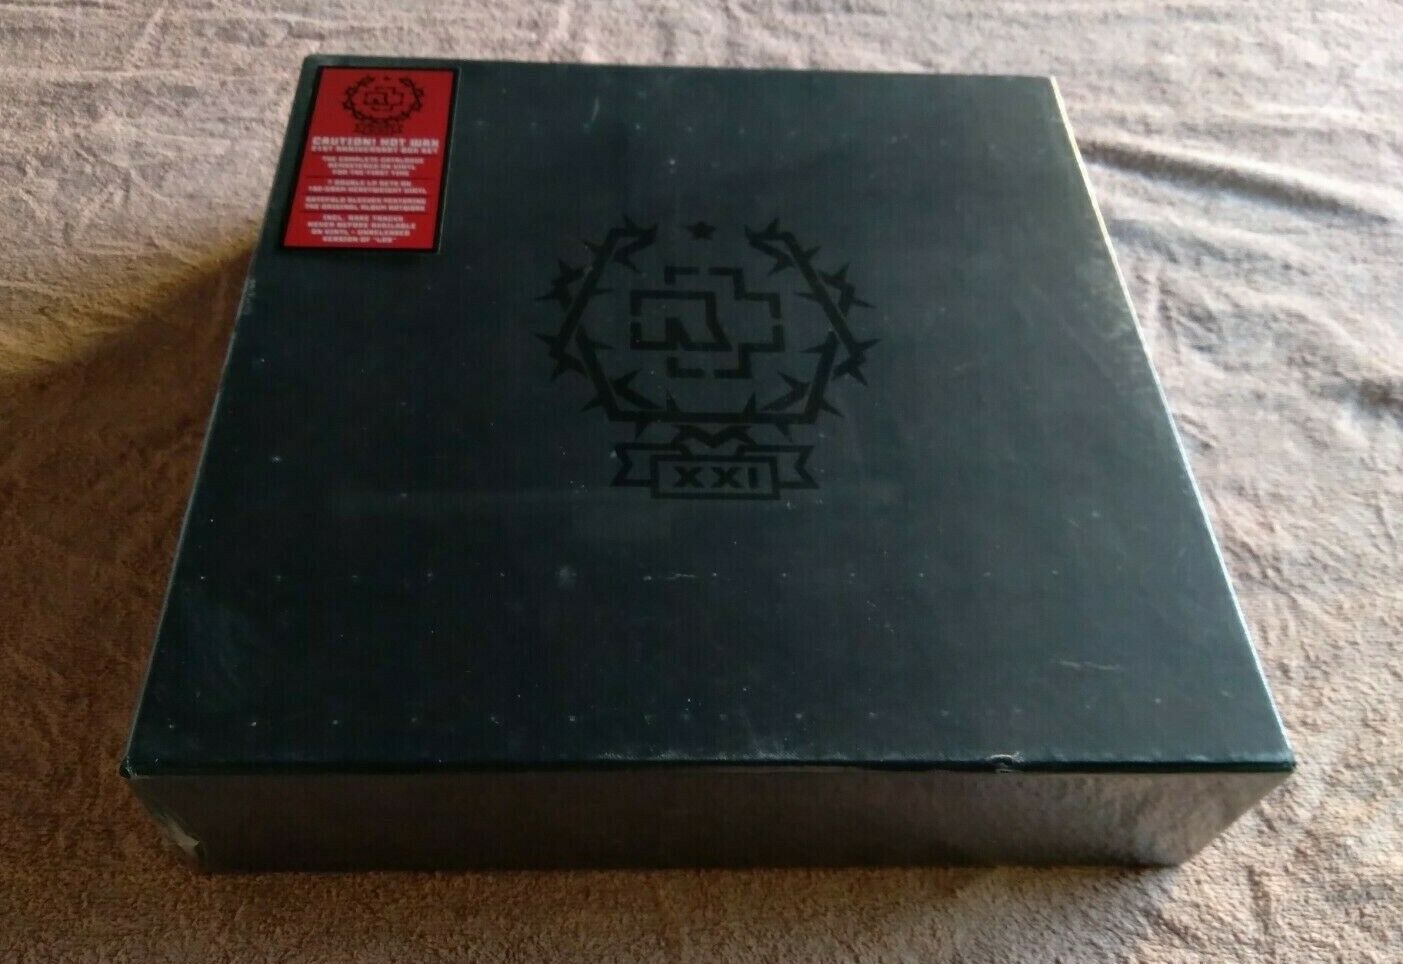 popsike.com - - XXI - Anniversary 14 LP Box Set 1st - NEW - IN SHRINK WARP - details